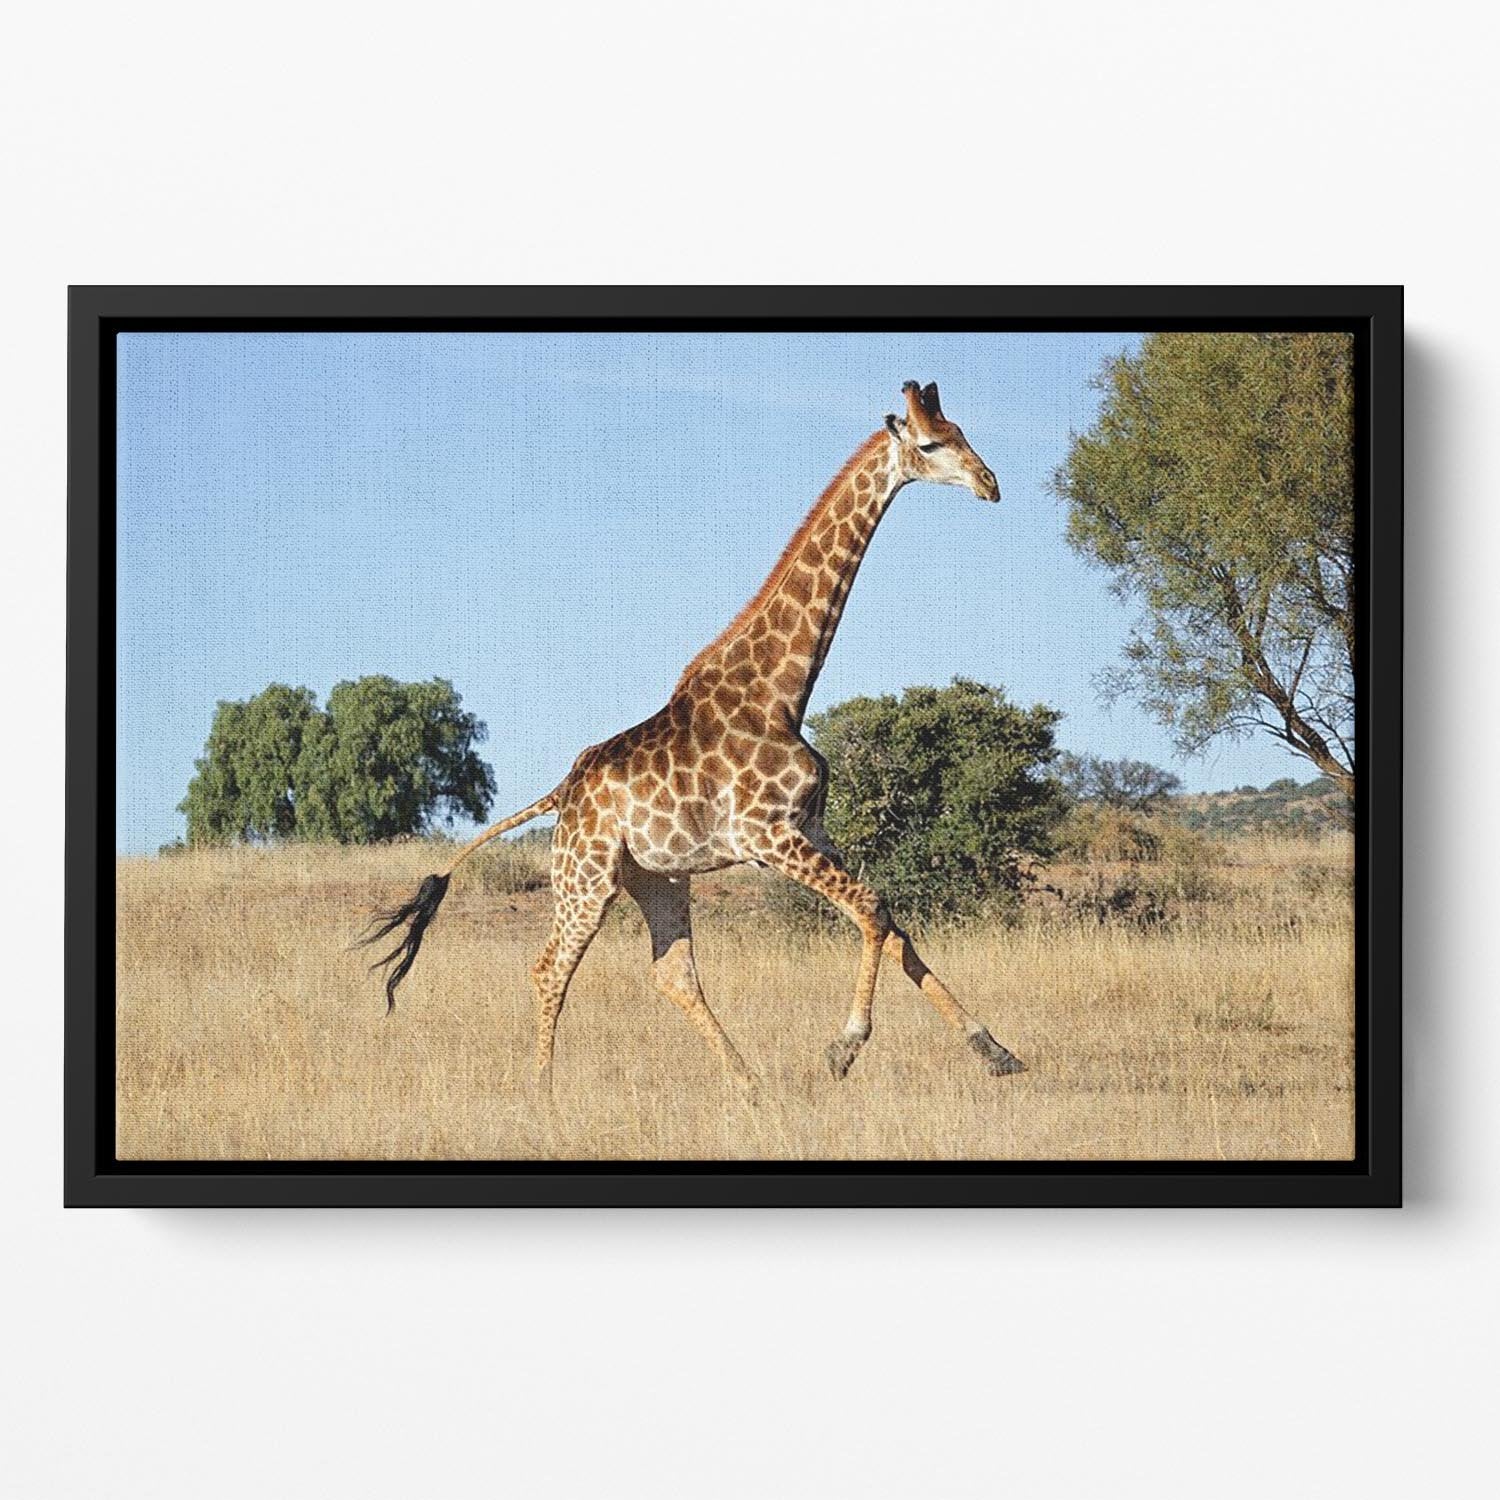 Giraffe running on the African plains South Africa Floating Framed Canvas - Canvas Art Rocks - 2